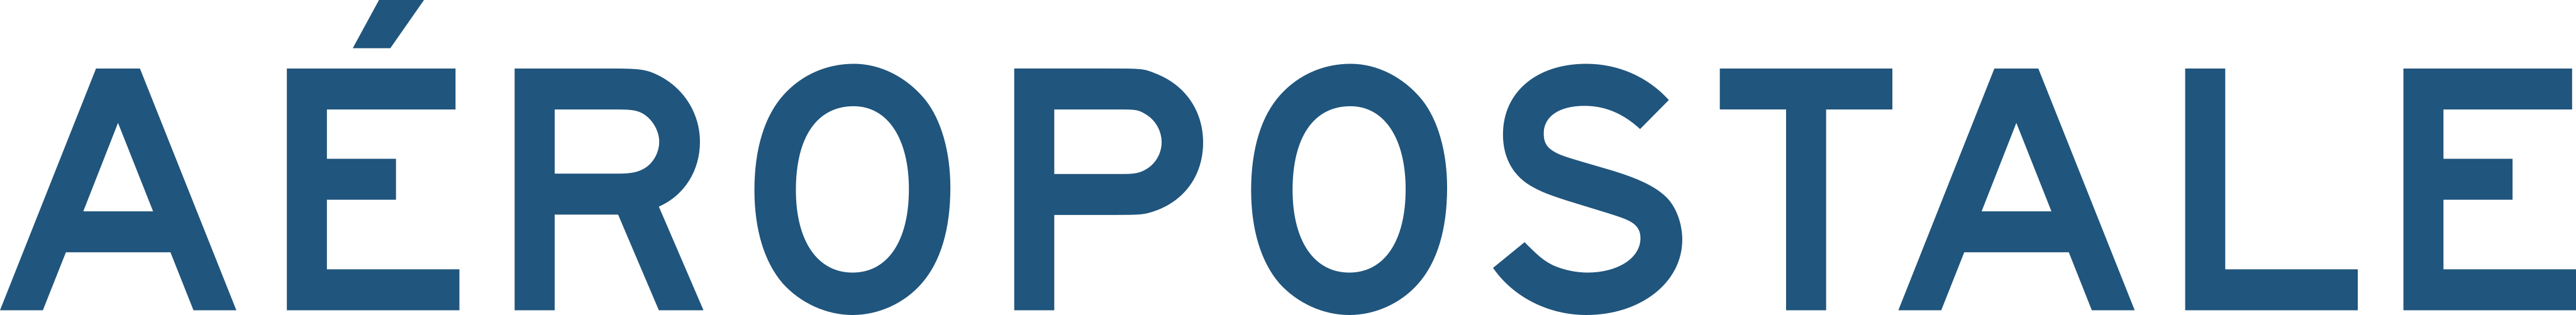 Aeropostale Logo.